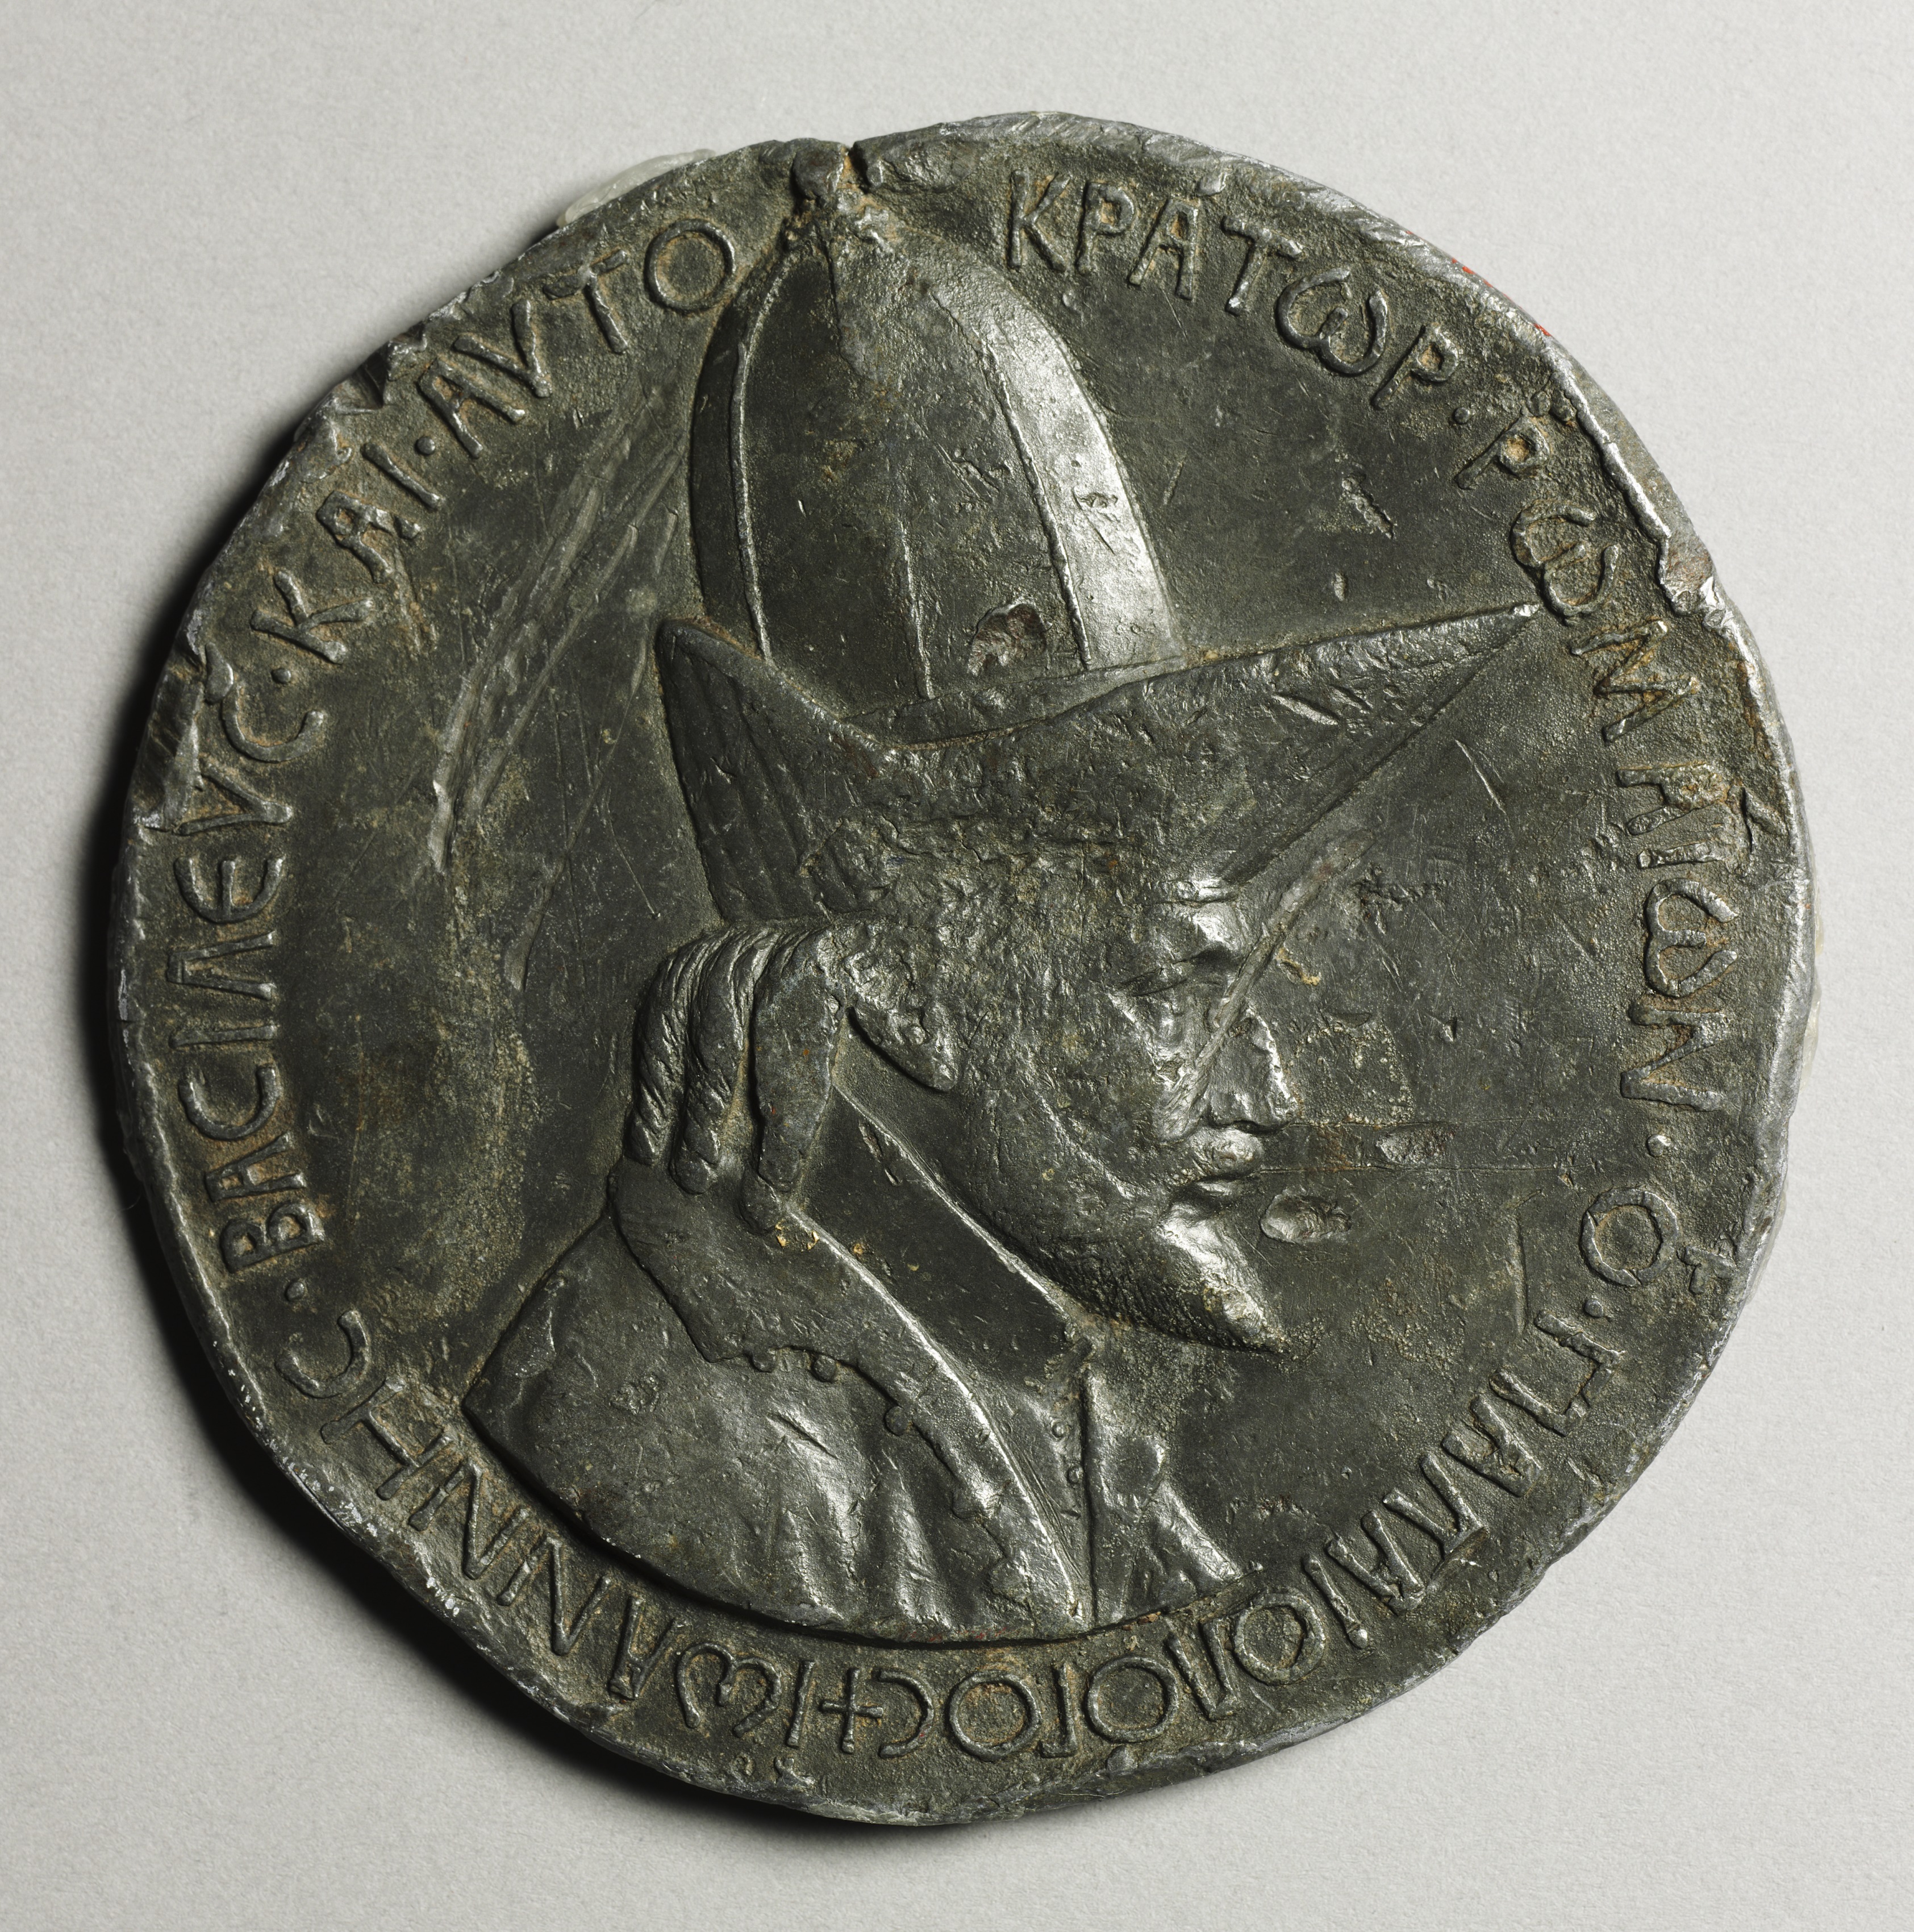 Portrait of John VIII Palaeologus, Emperor of Constantinople, 1424-1428 (obverse)